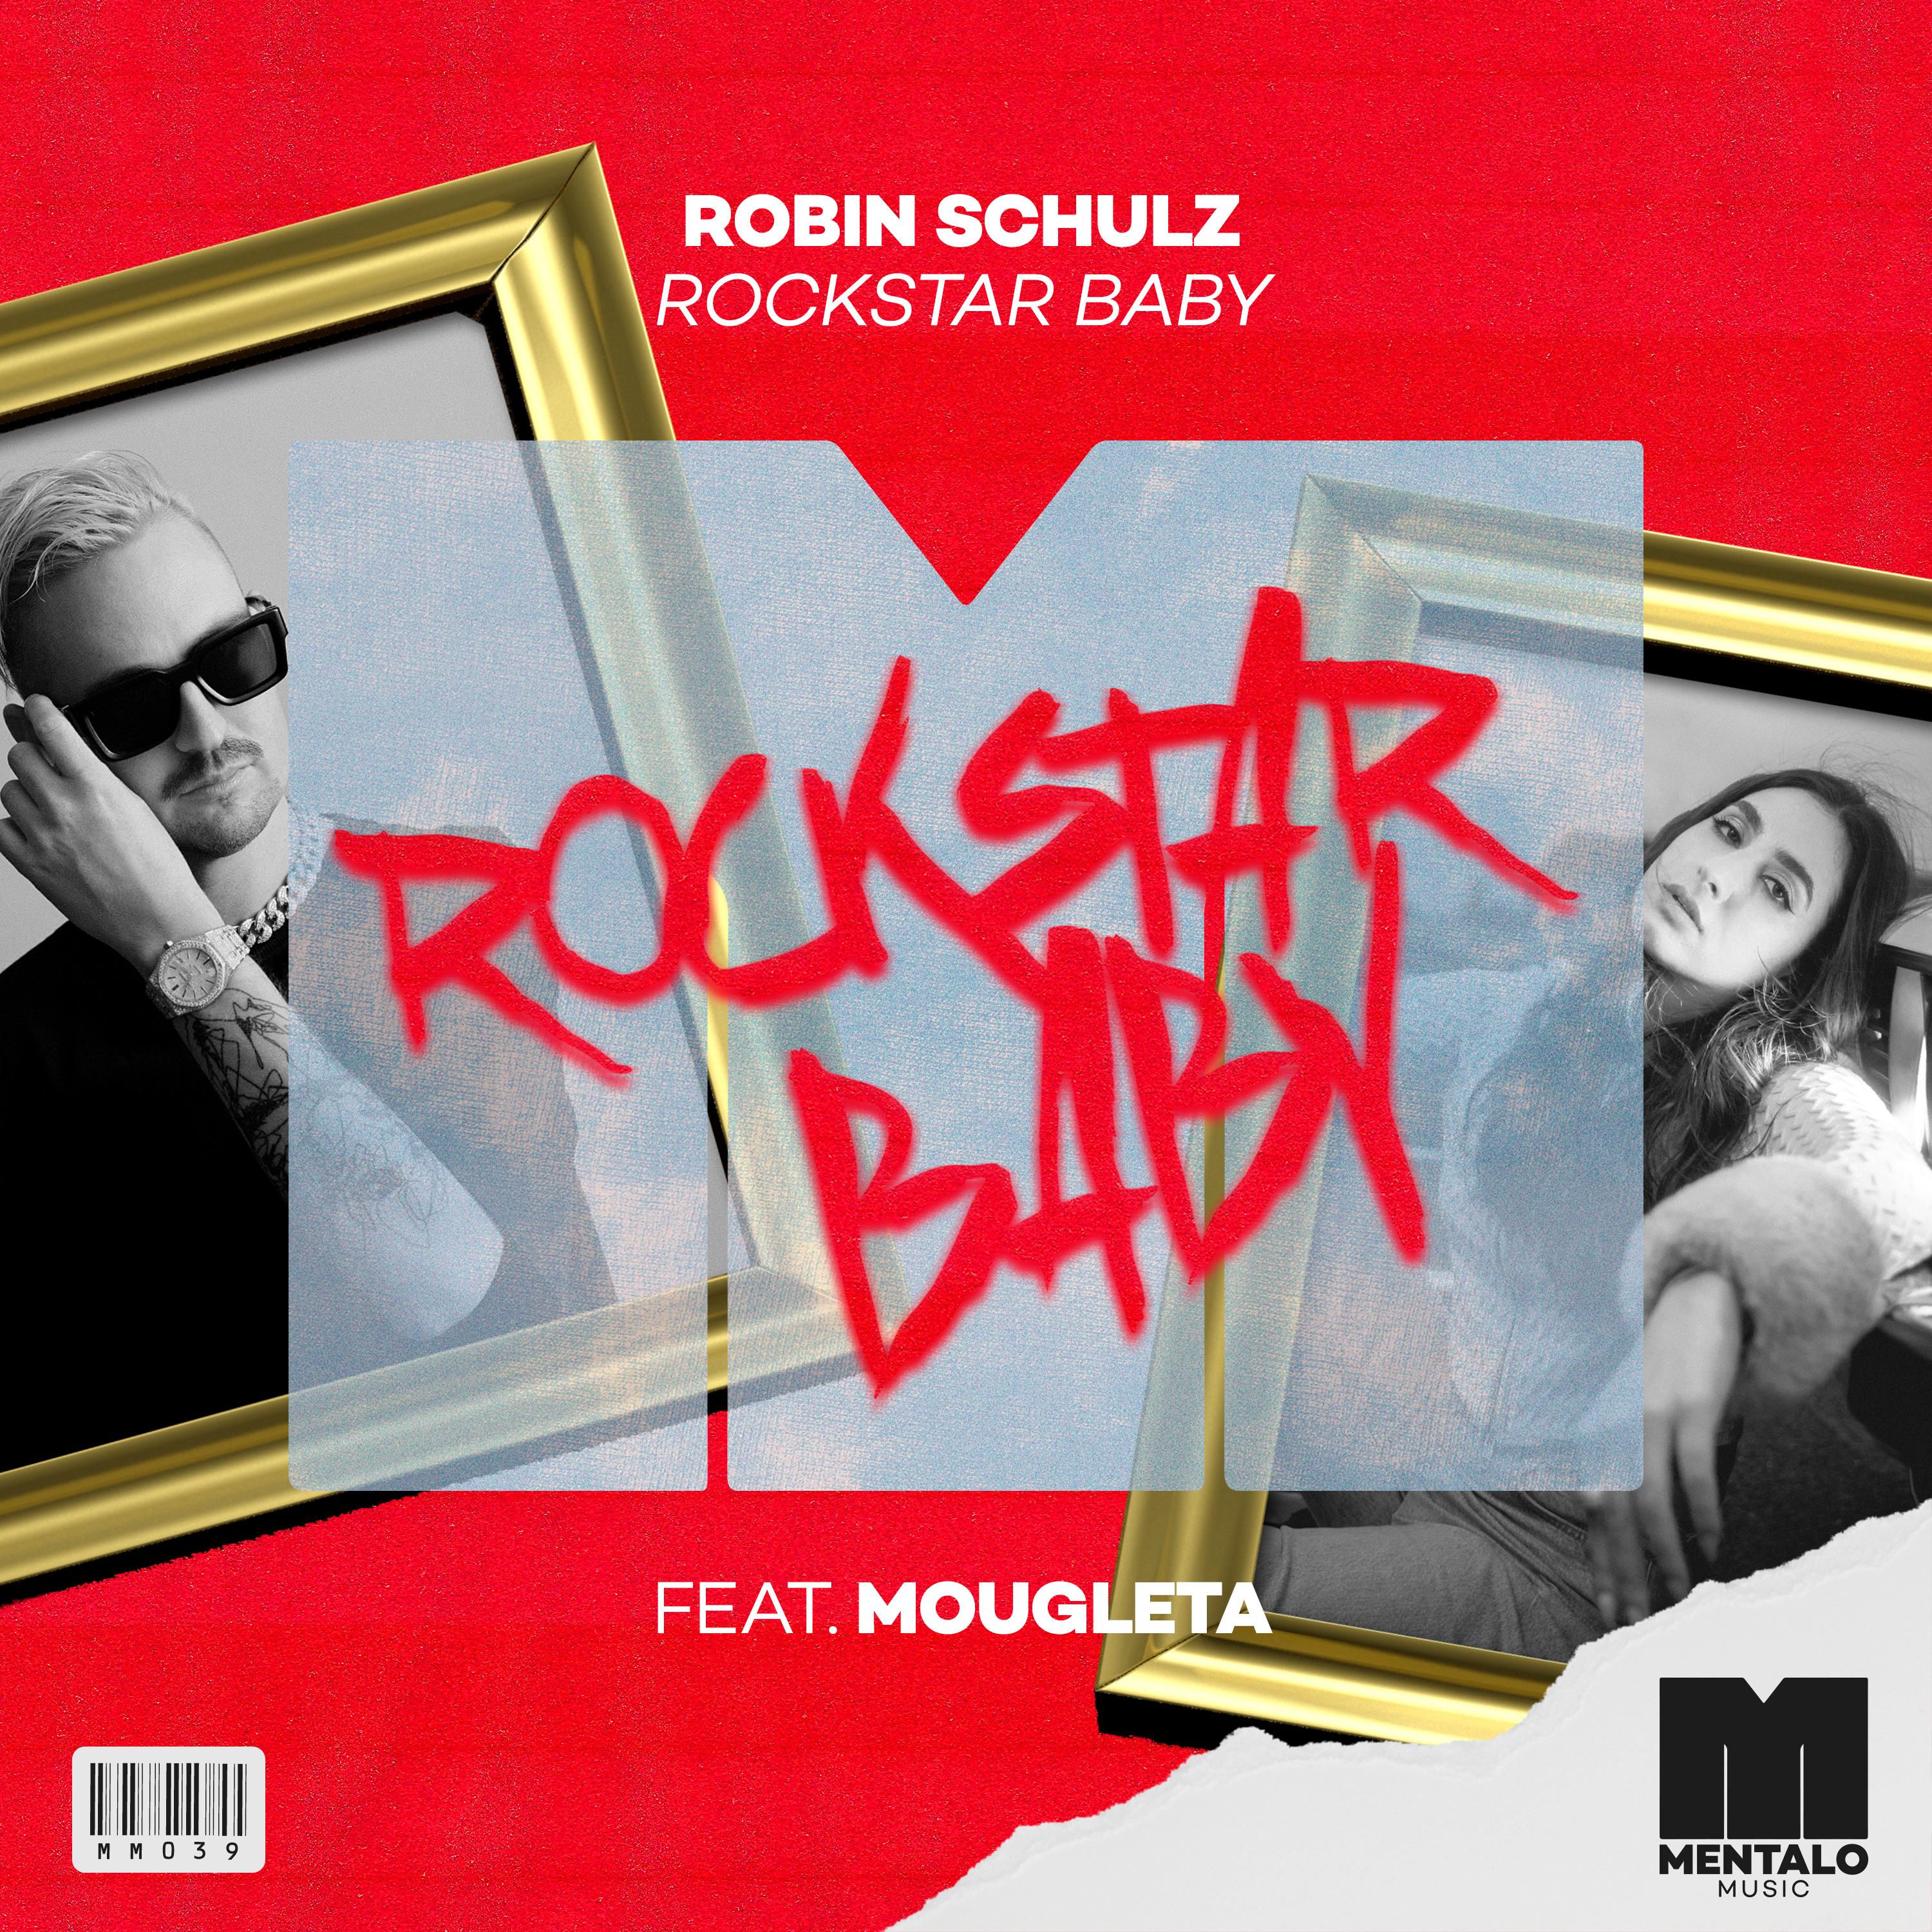 Anne marie coi leray. Robin Schulz. Robin Schulz Rockstar Baby feat. Mougleta. Робин Шульц Rockstar Baby. Robin Schulz f.